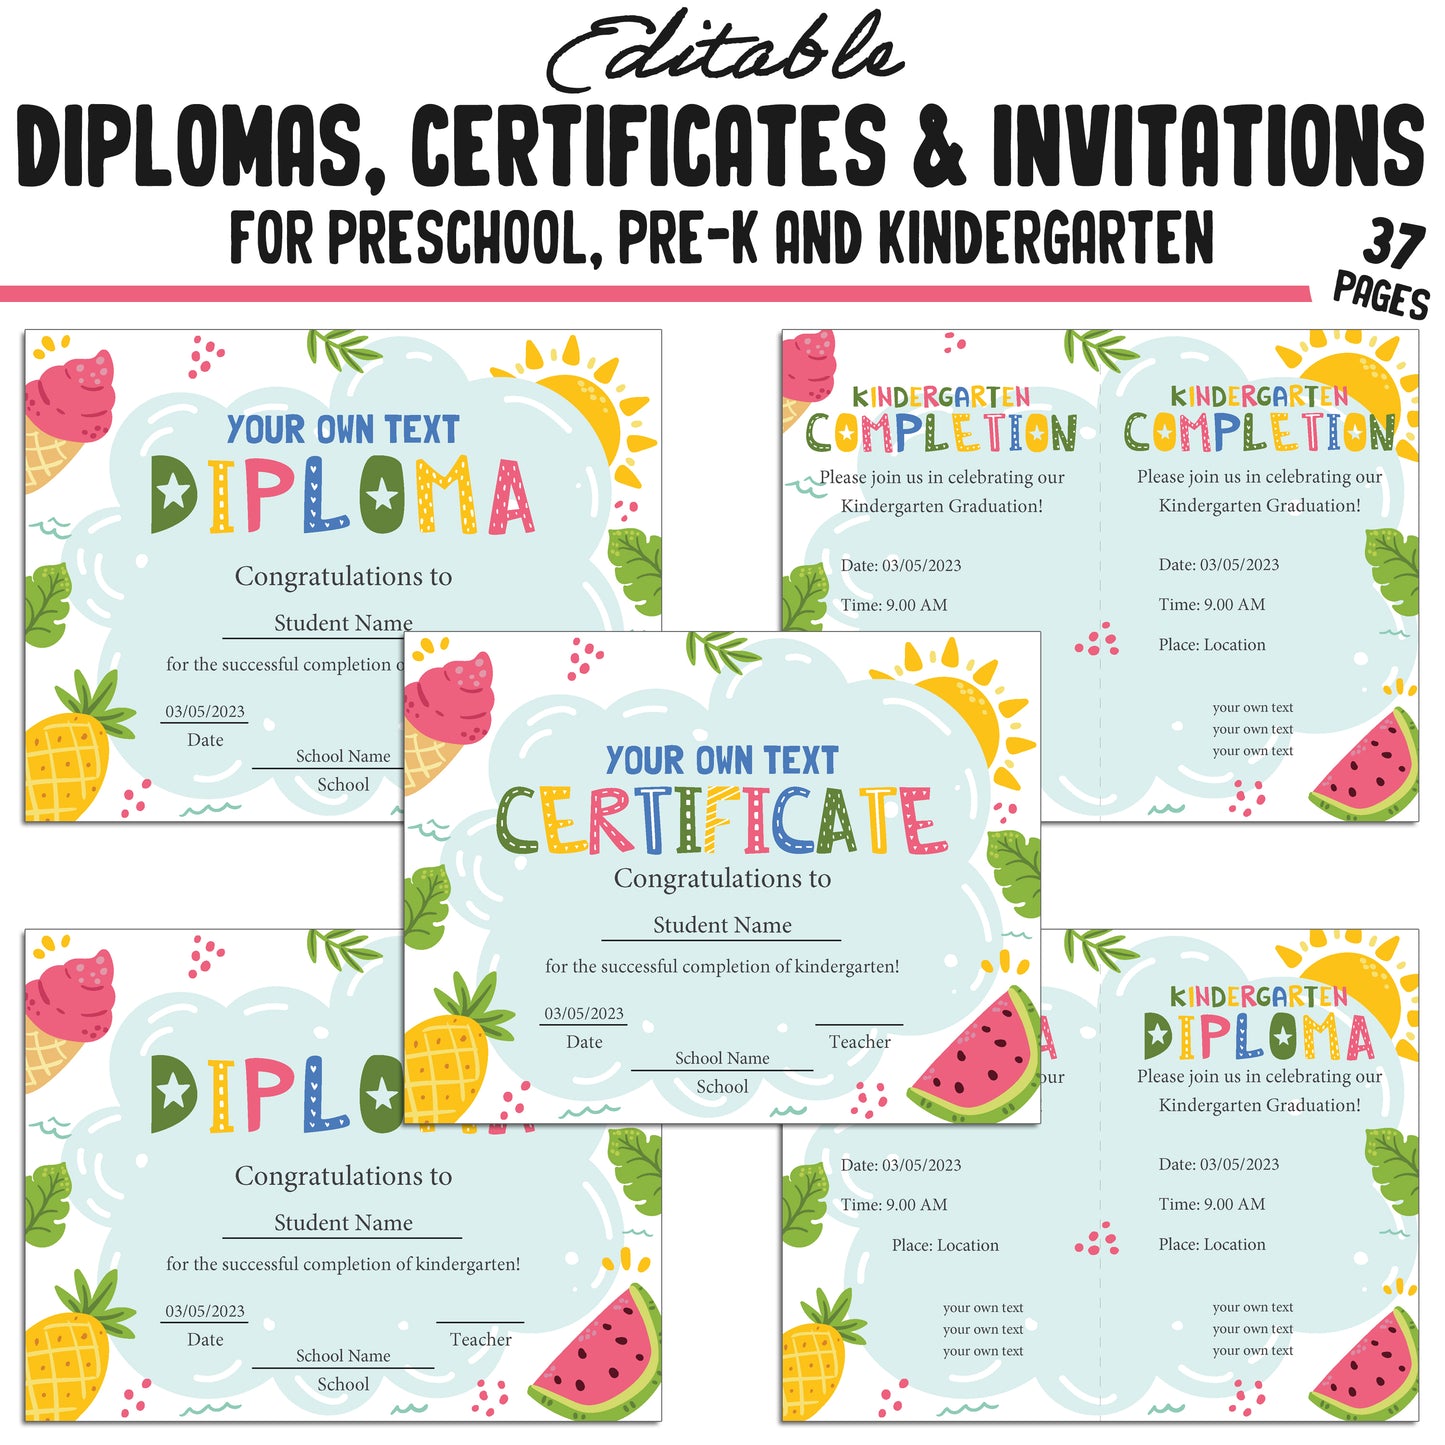 37 Customizable Pre-K Diplomas, Kindergarten, and Preschool Certificates, and Invitation Templates (PDF Files) - Instant Download